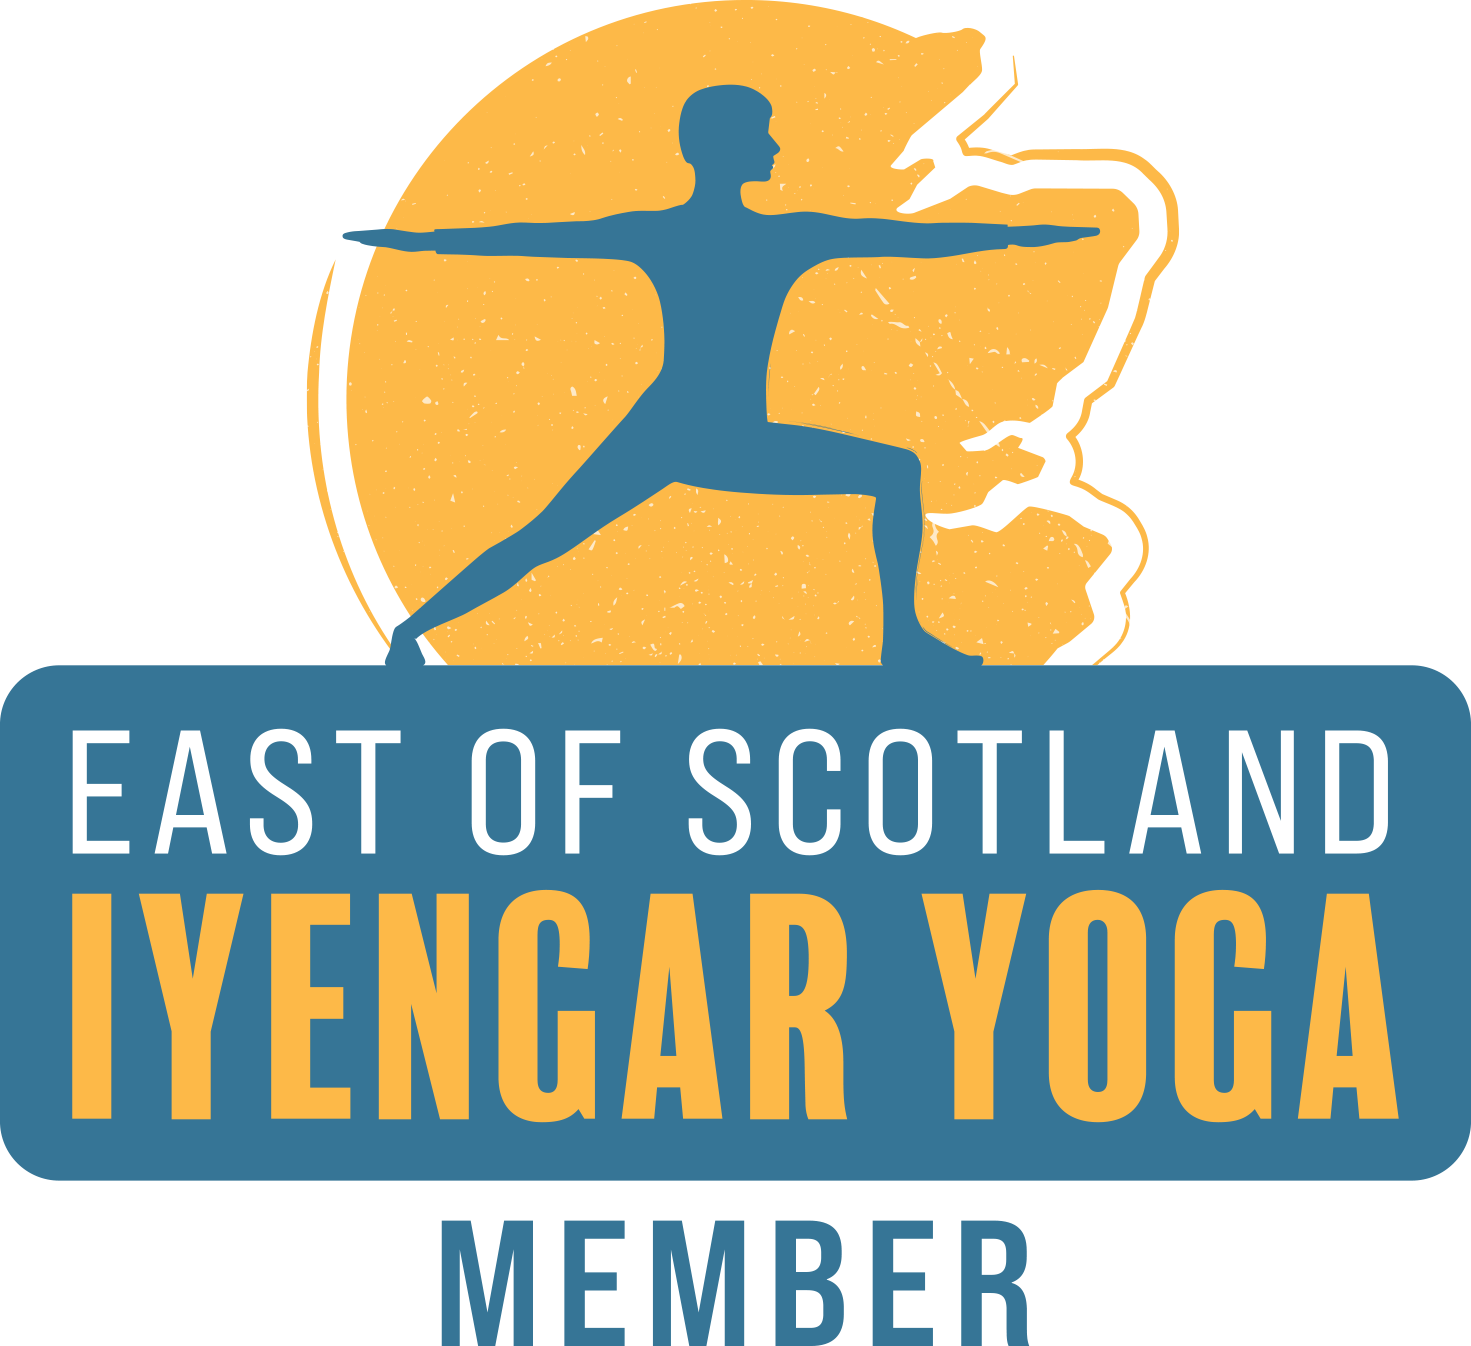 New Member version of the East of Scotland Iyengar Yoga Logo.